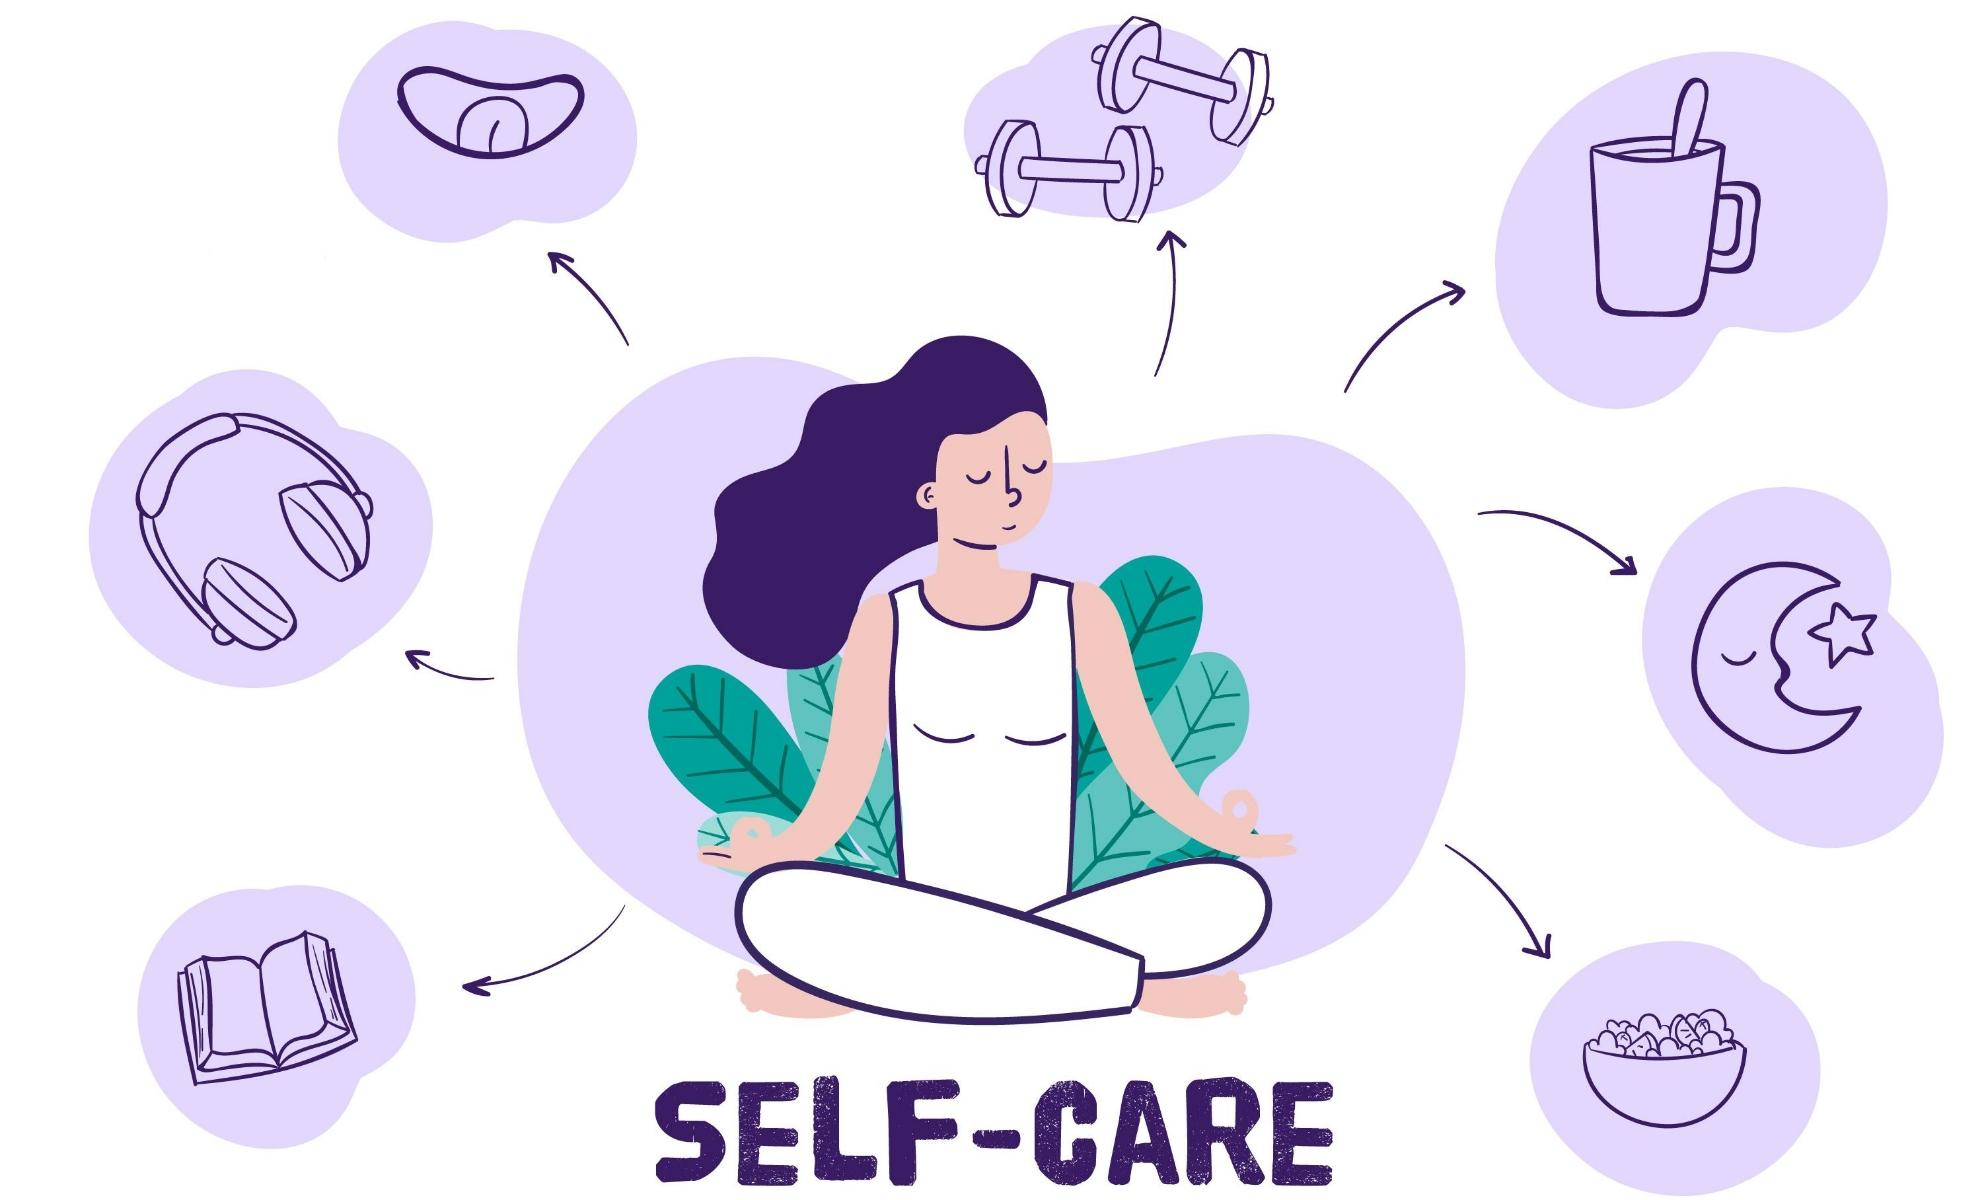 Self-care, it’s not a myth!